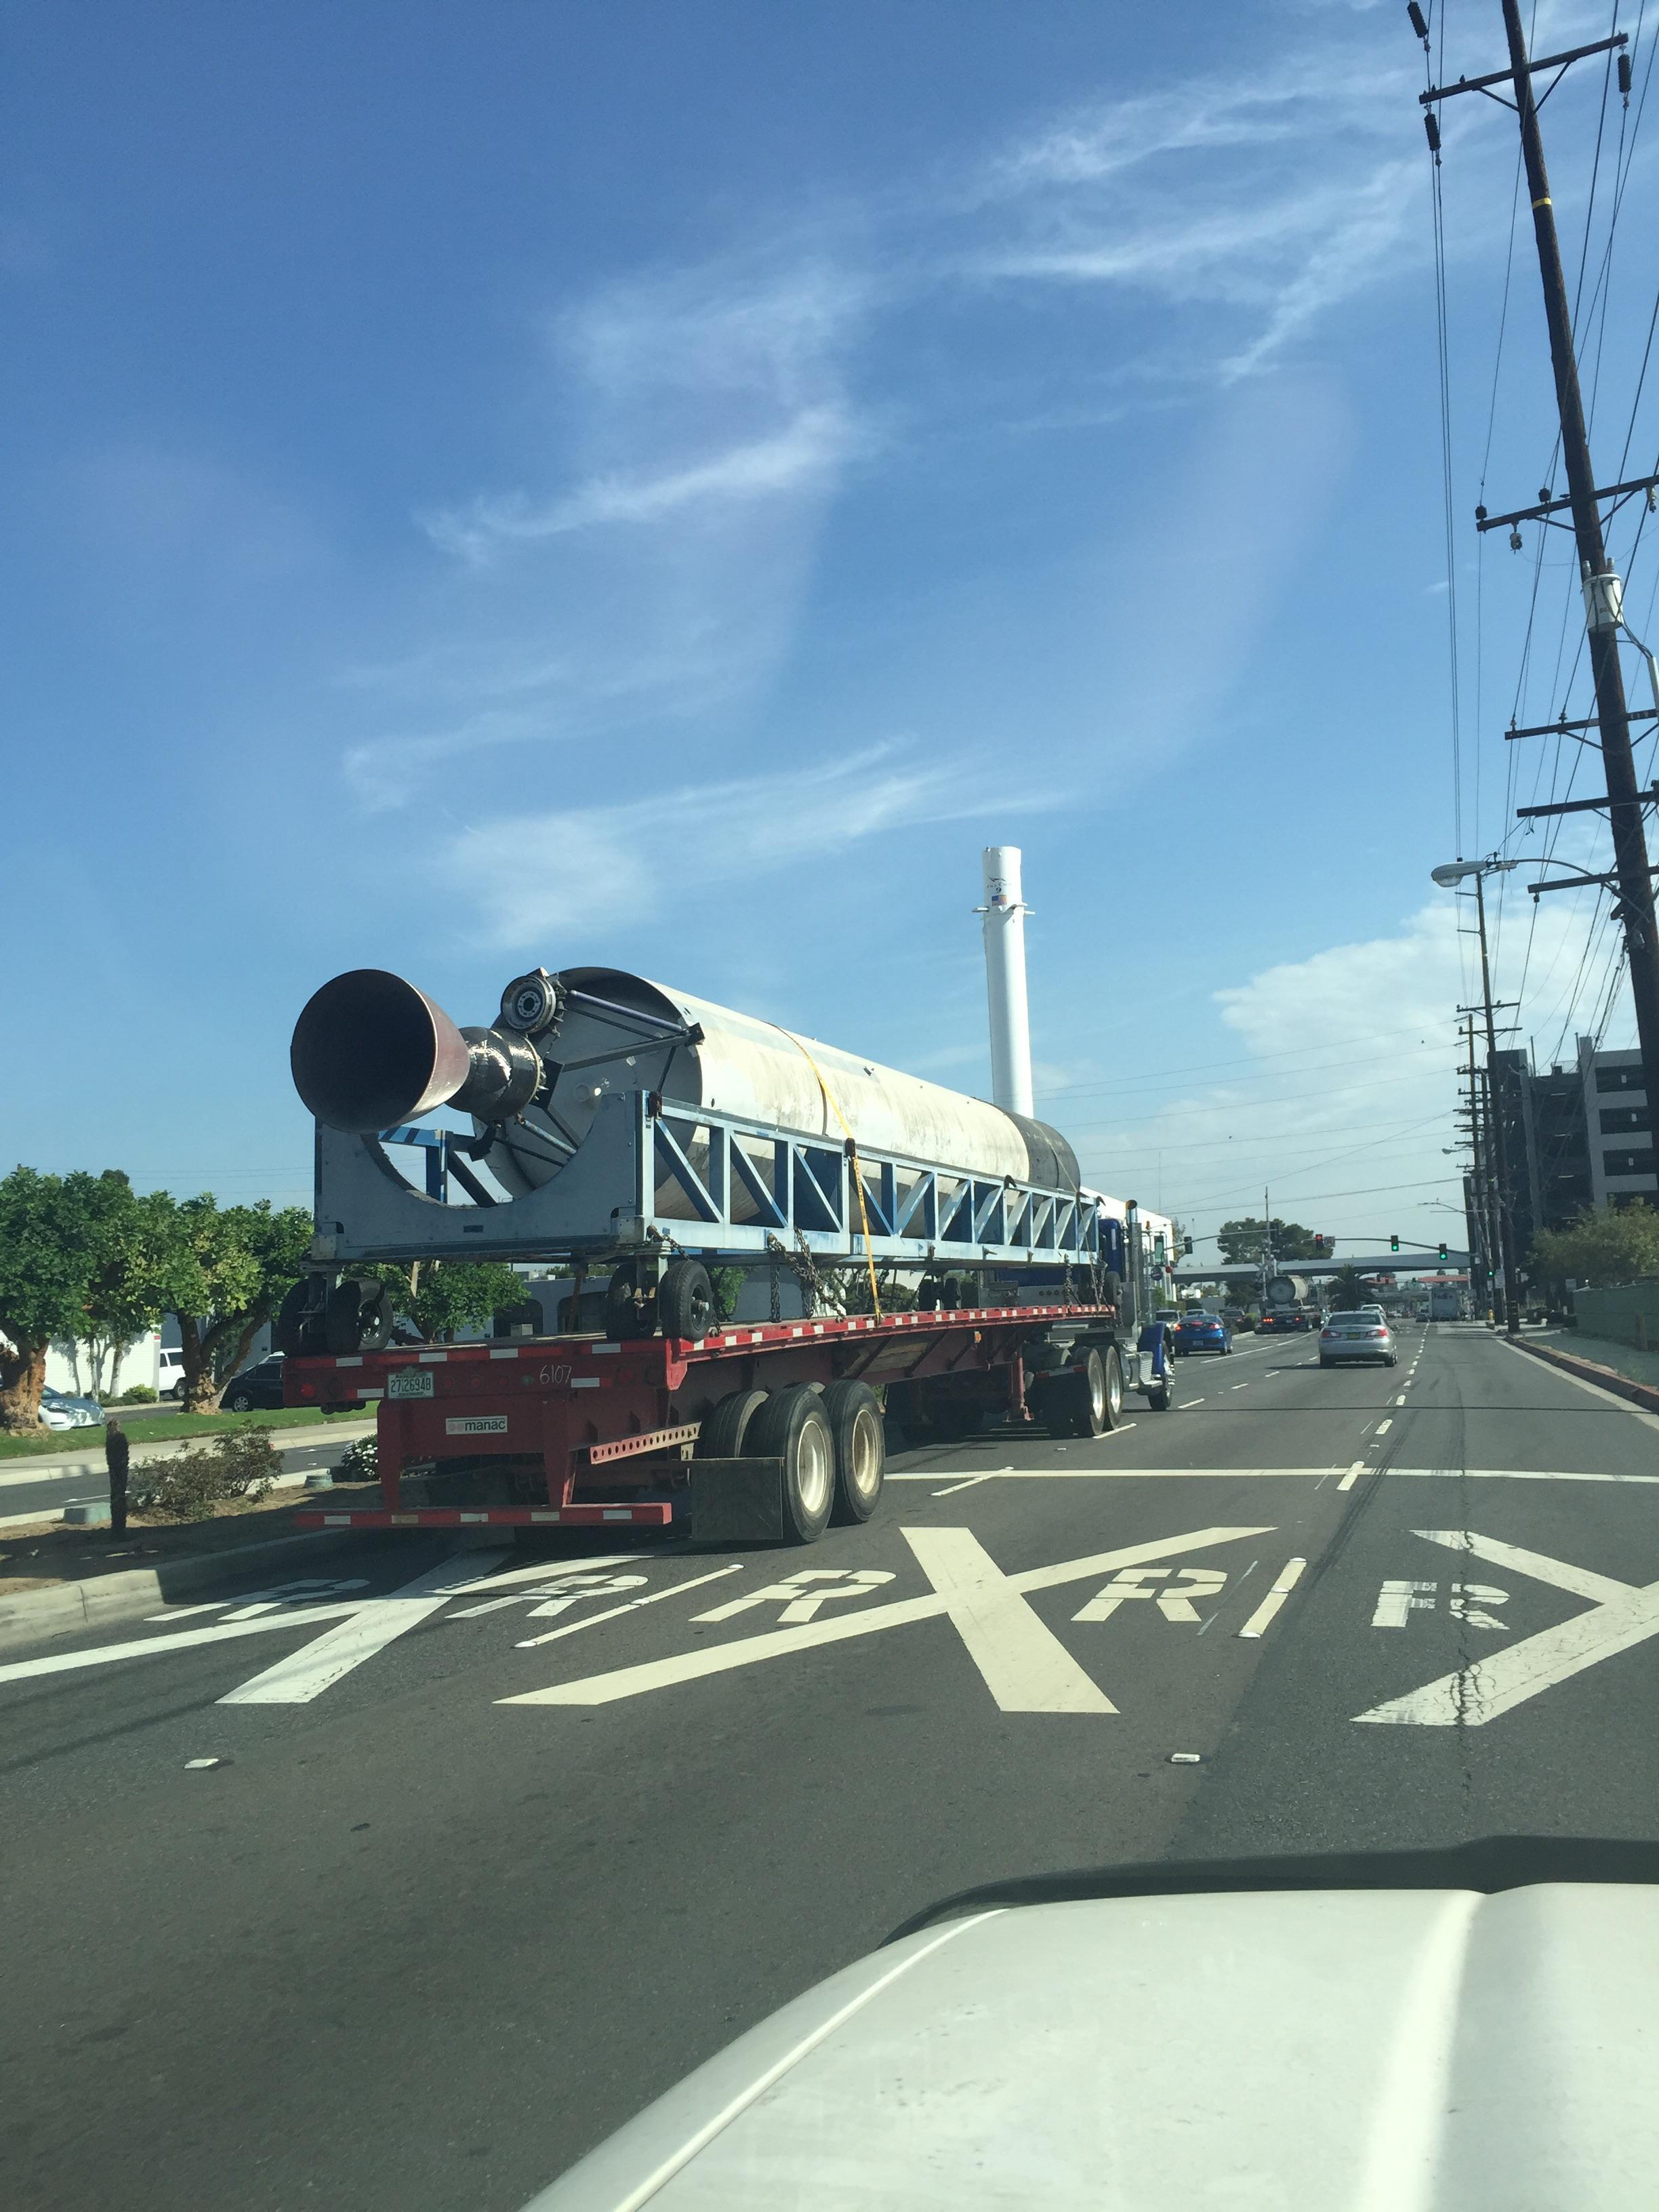 SpaceX Falcon 1 Logo - Falcon 1 getting refurbished?